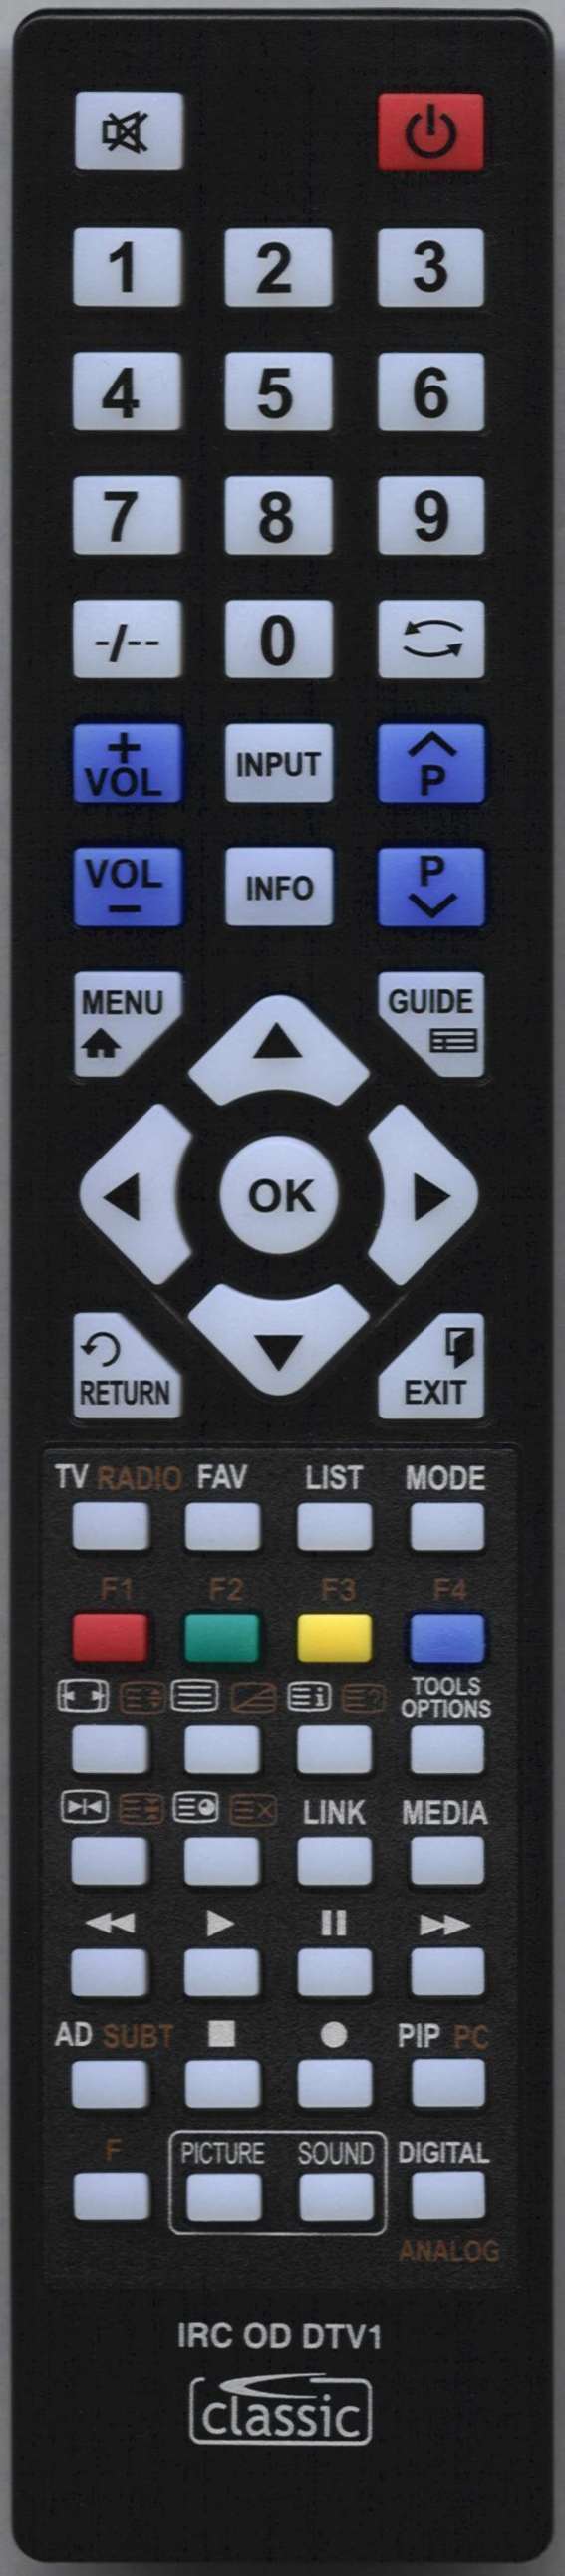 UMC X23/50E-BG-FTCDUP-UK Remote Control Alternative